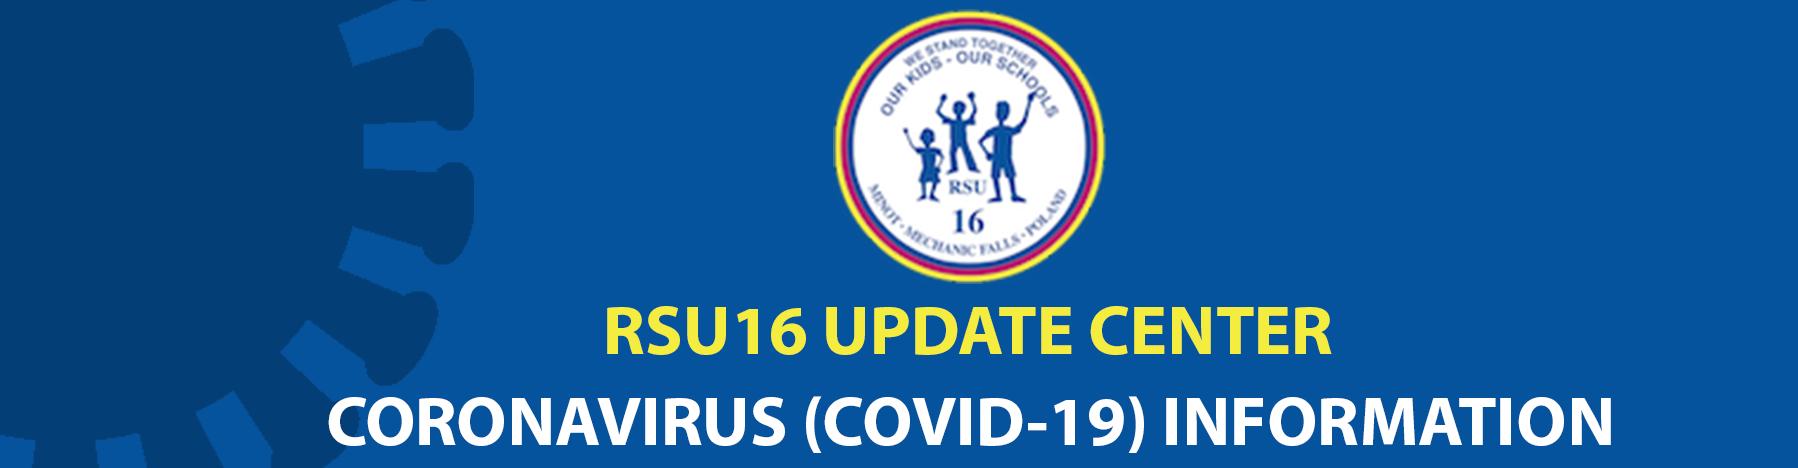 RSU16 - Coronavirus Update Center Information banner